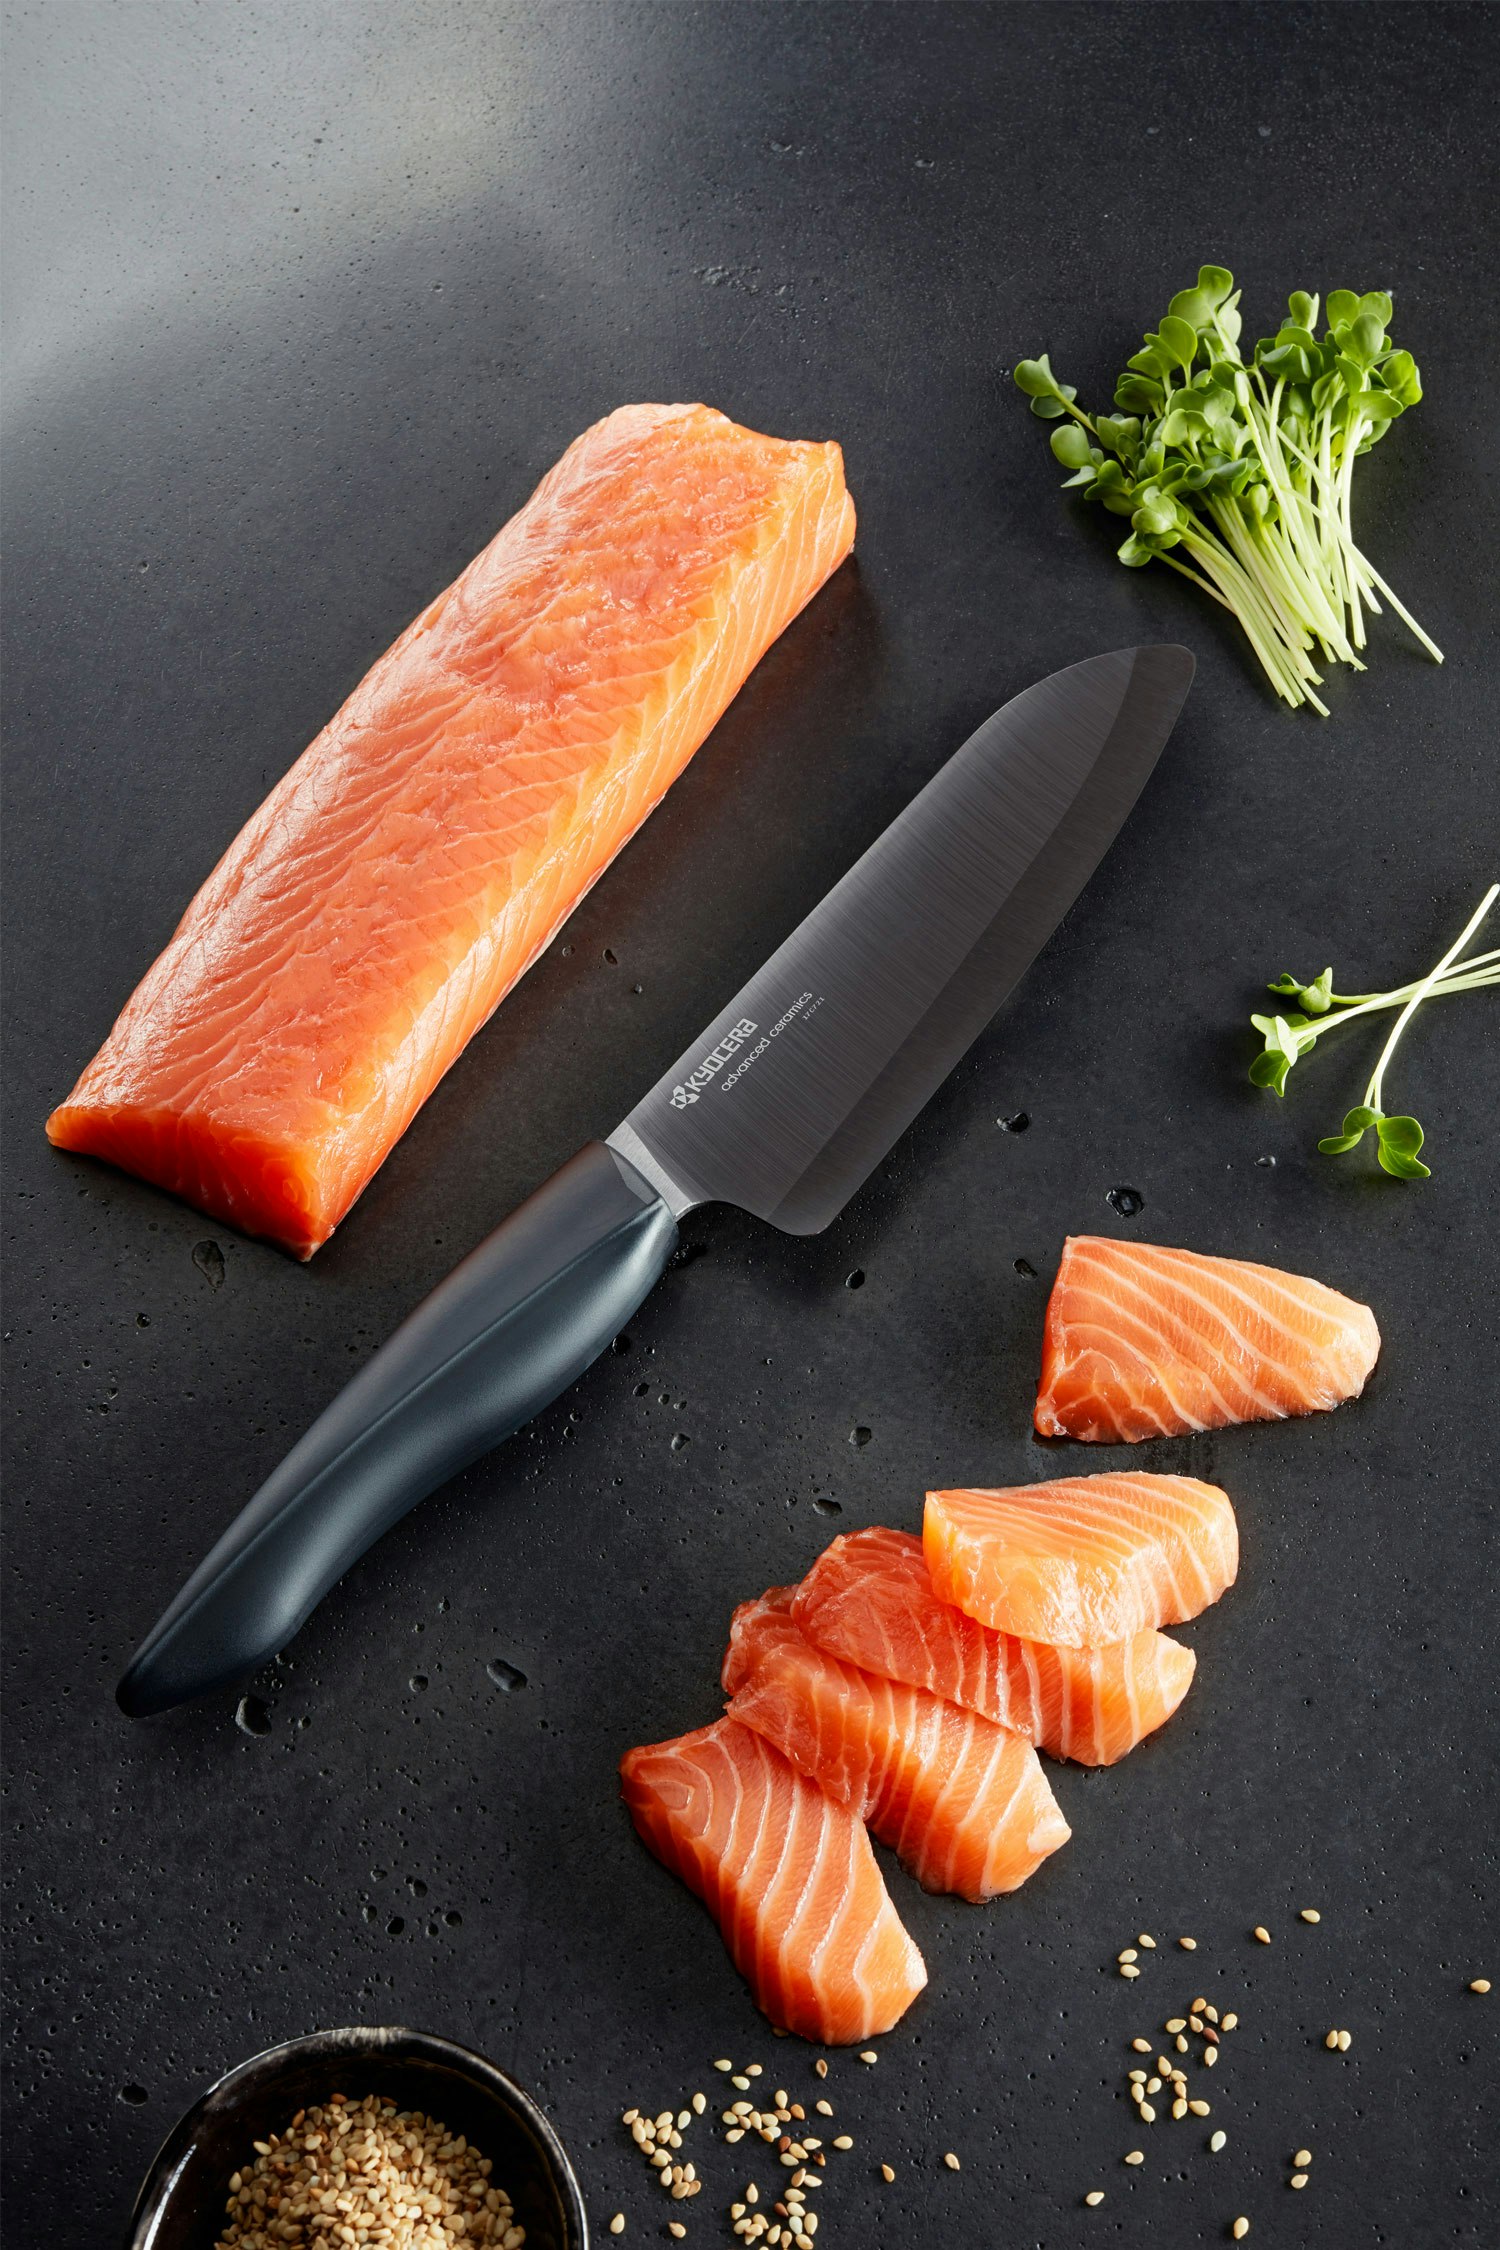 https://royaldesign.com/image/2/kyocera-shin-chef-knife-santoku-knife-16-cm-black-1